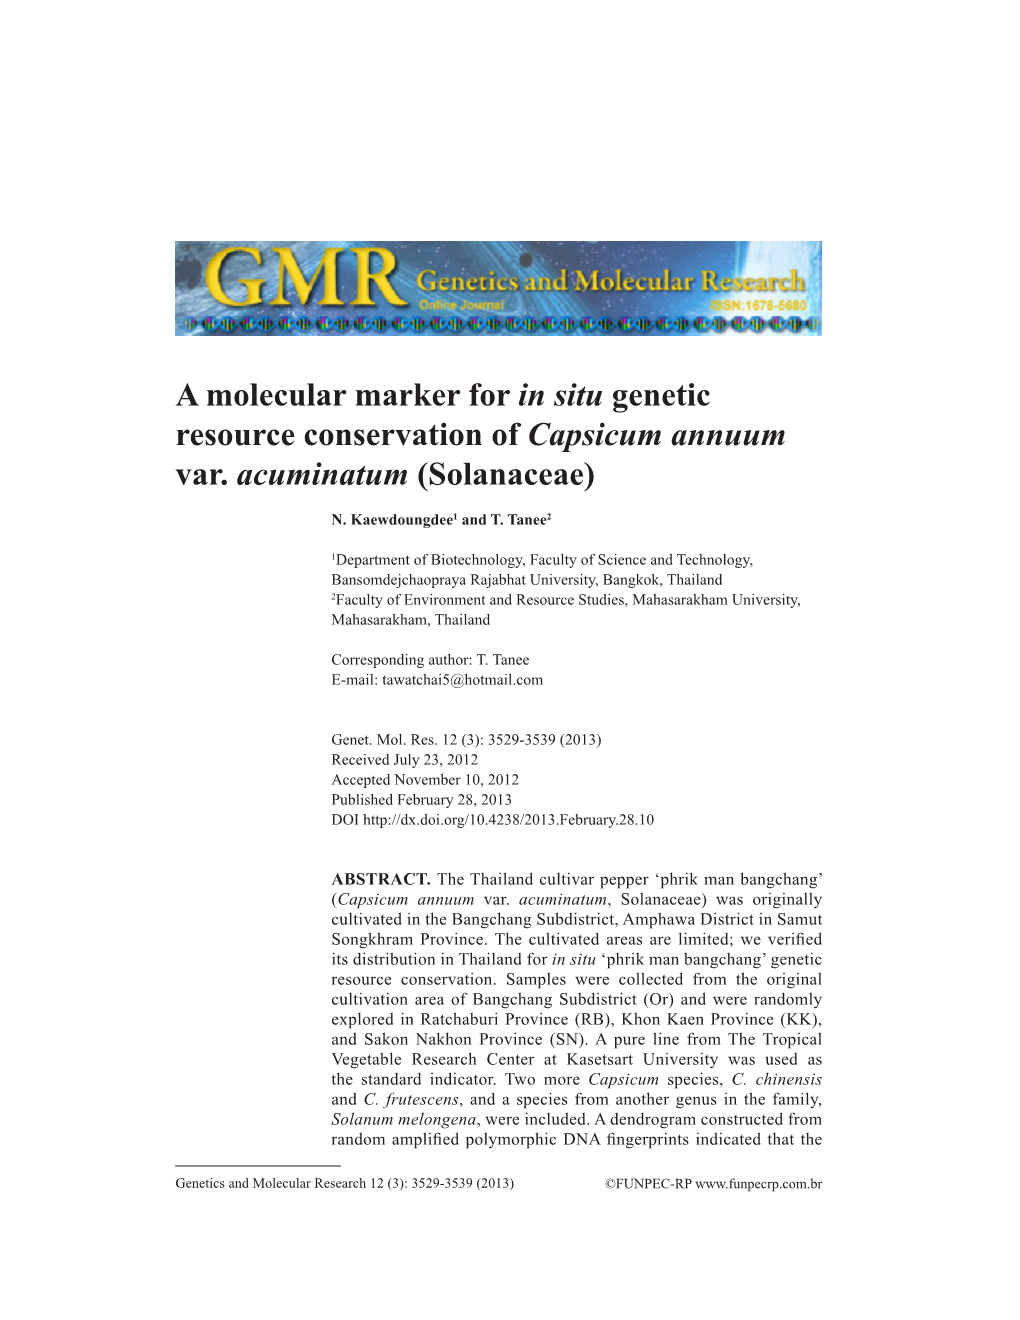 A Molecular Marker for in Situ Genetic Resource Conservation of Capsicum Annuum Var